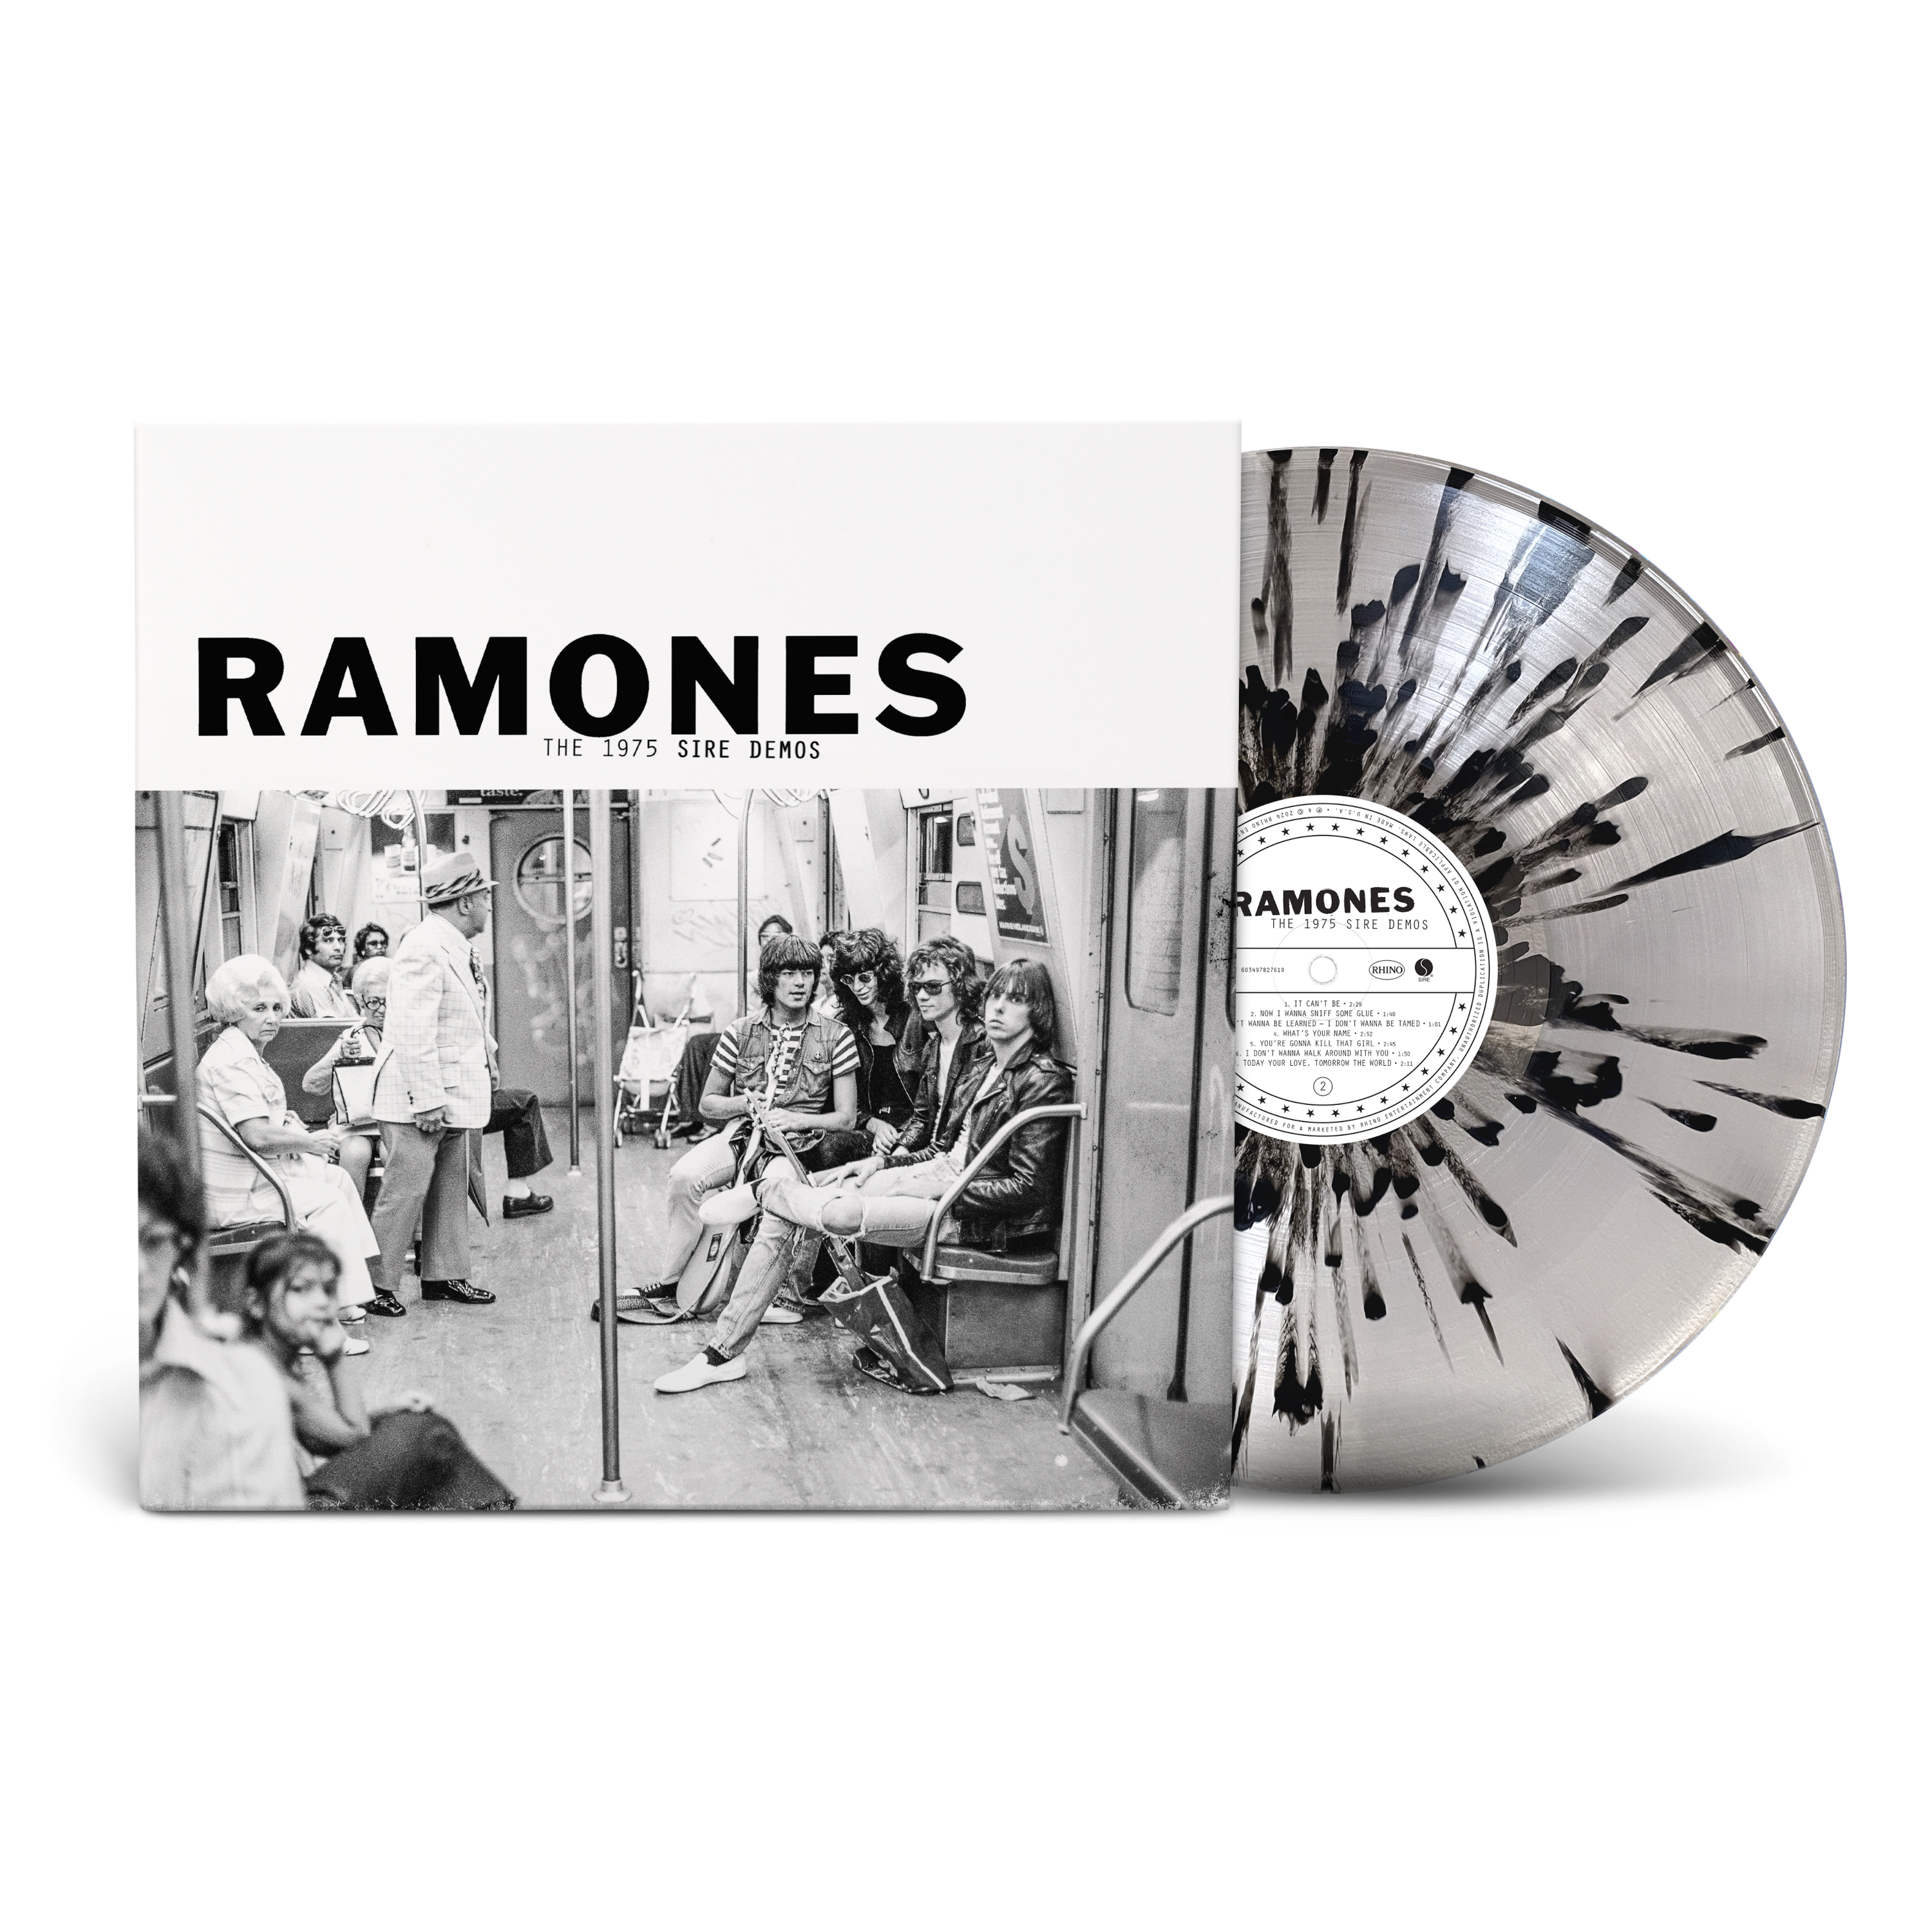 Ramones The 1975 Sire Demos (RSD 2024) (Vinyl) (UK IMPORT) - Picture 1 of 1